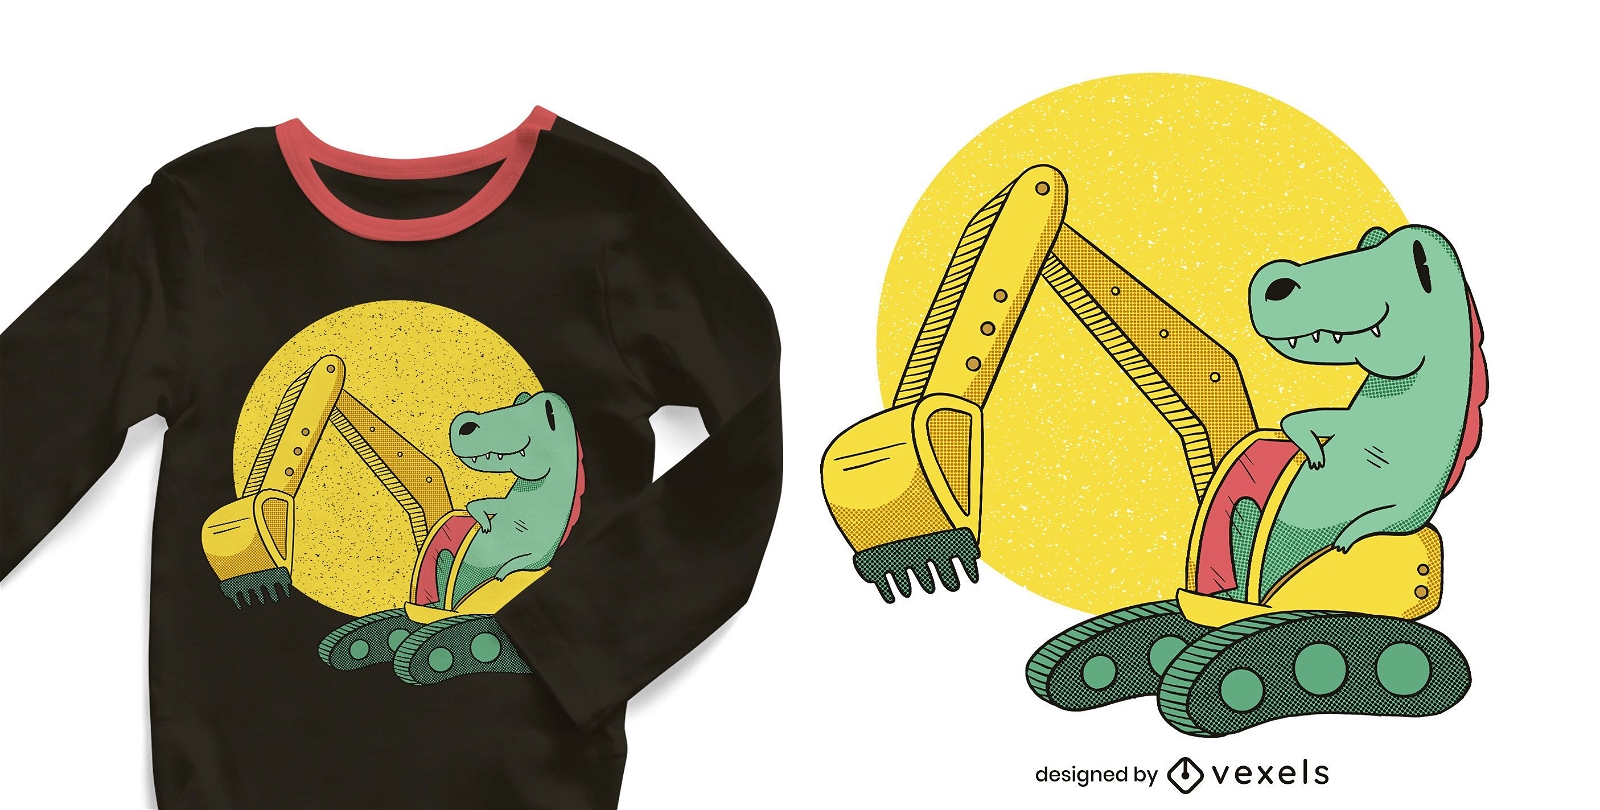 Excavator dinosaur t-shirt design